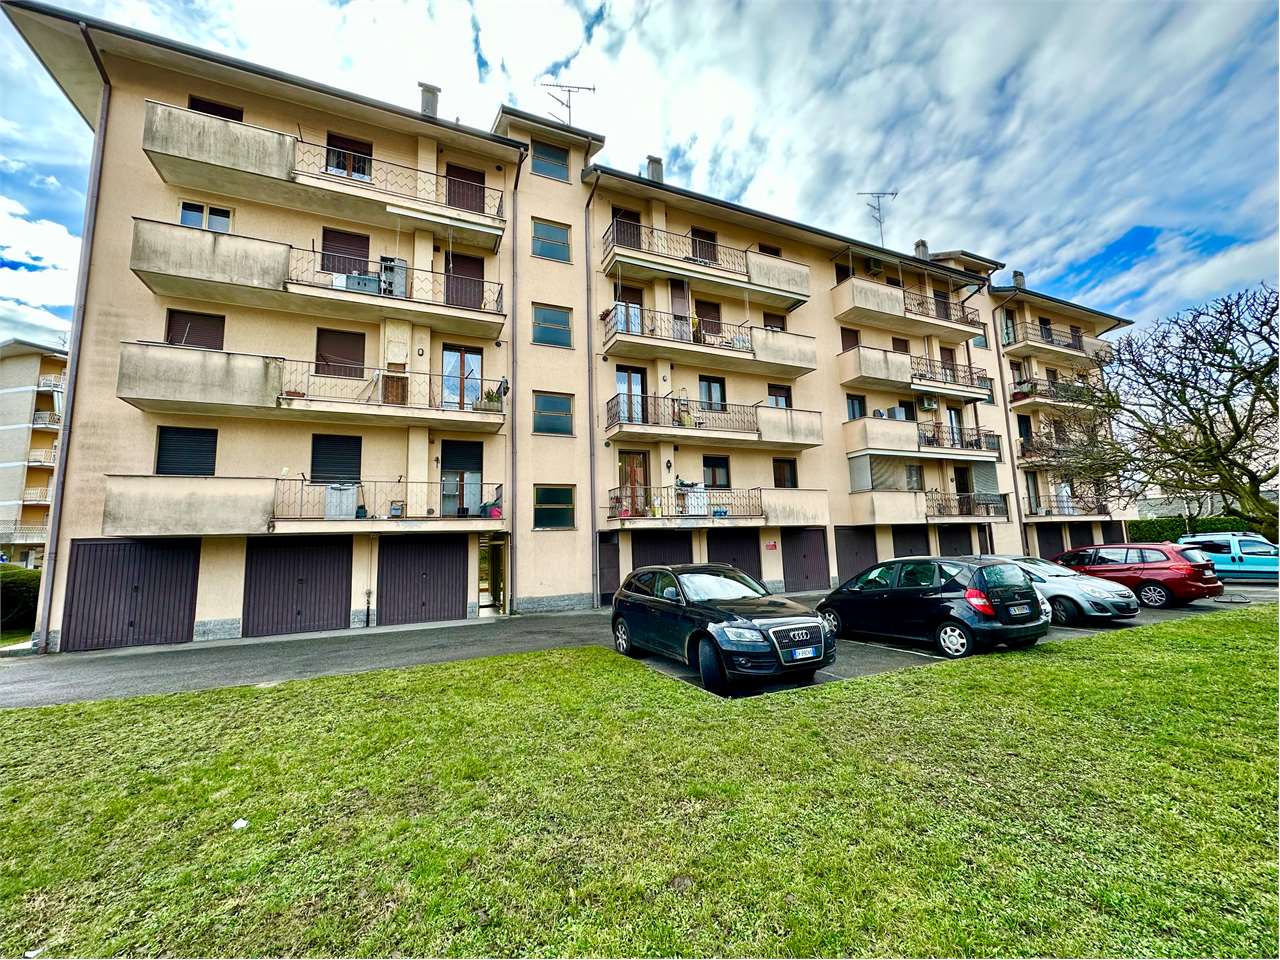 Vendita Quadrilocale Appartamento Arona Via Vittorio veneto  58/60 471440